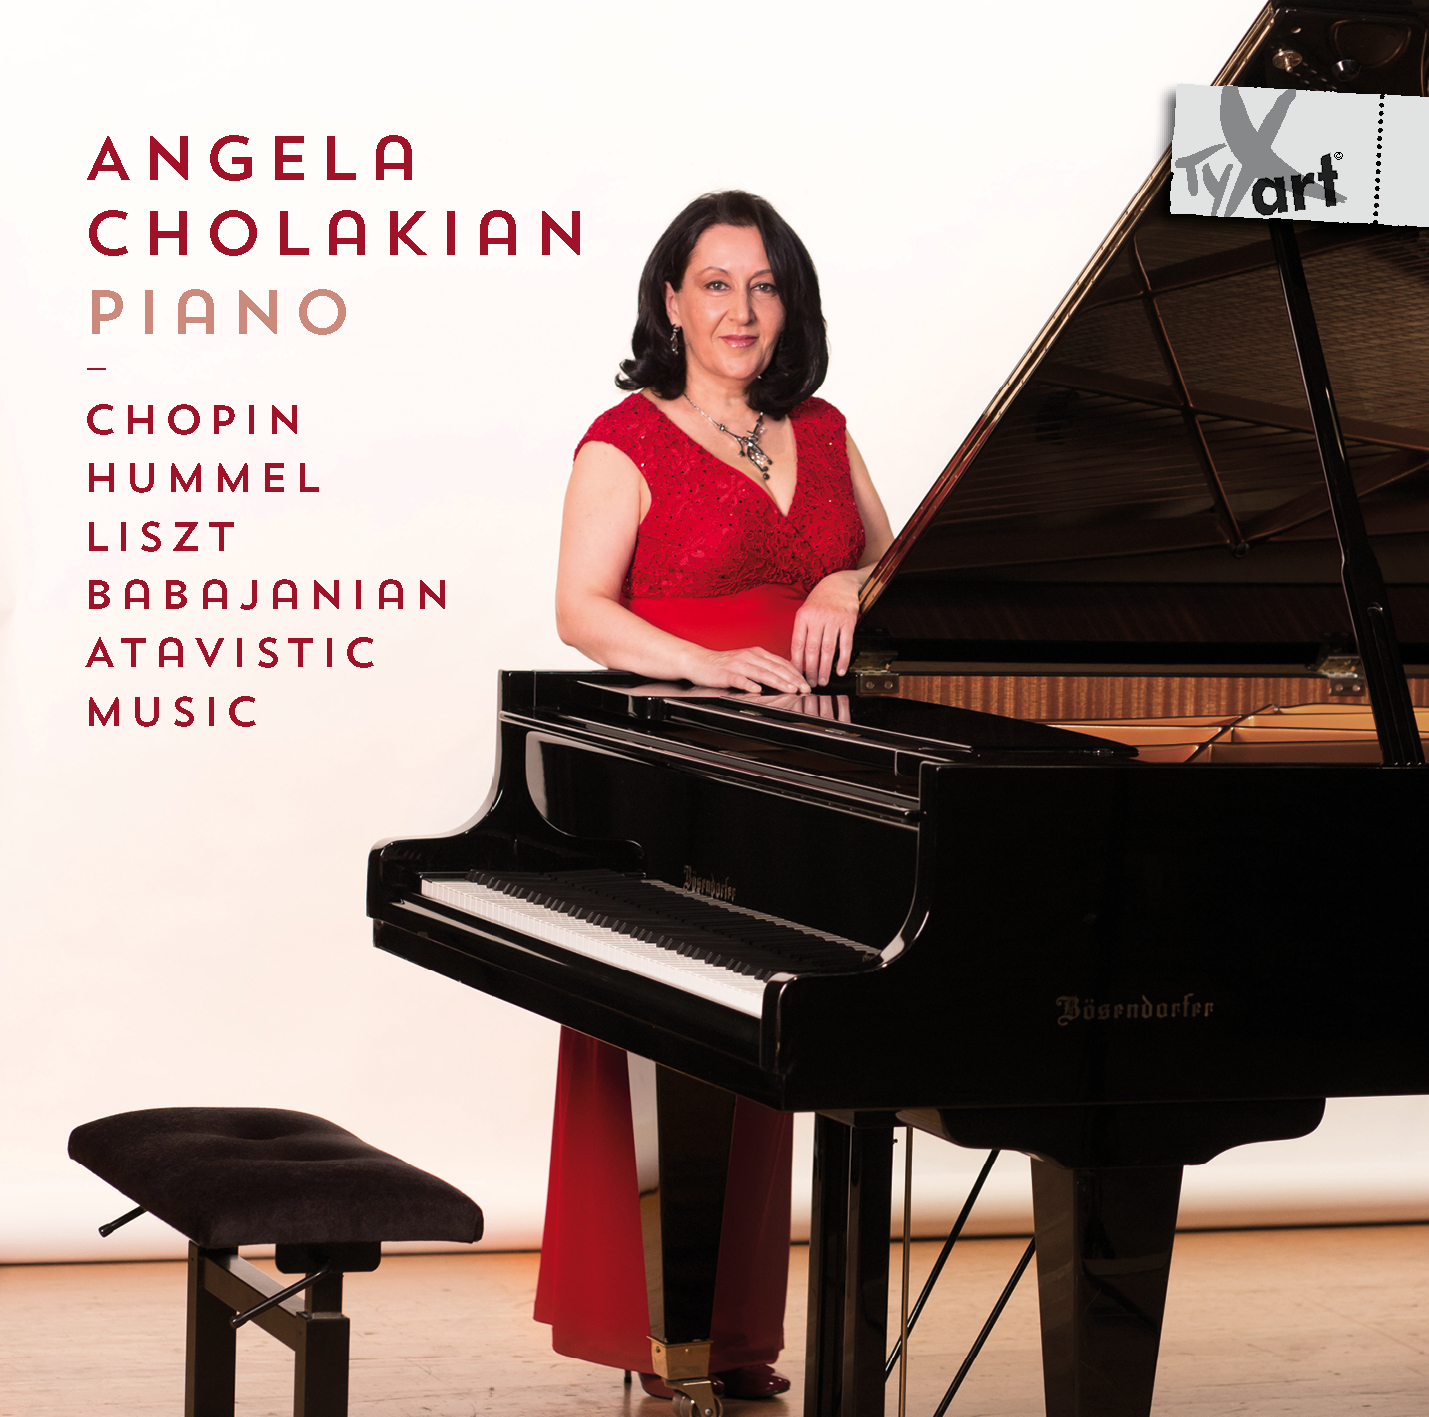 Angela Cholakian, Piano: Chopin, Hummel, Liszt, Babajanian, Atavistic Music